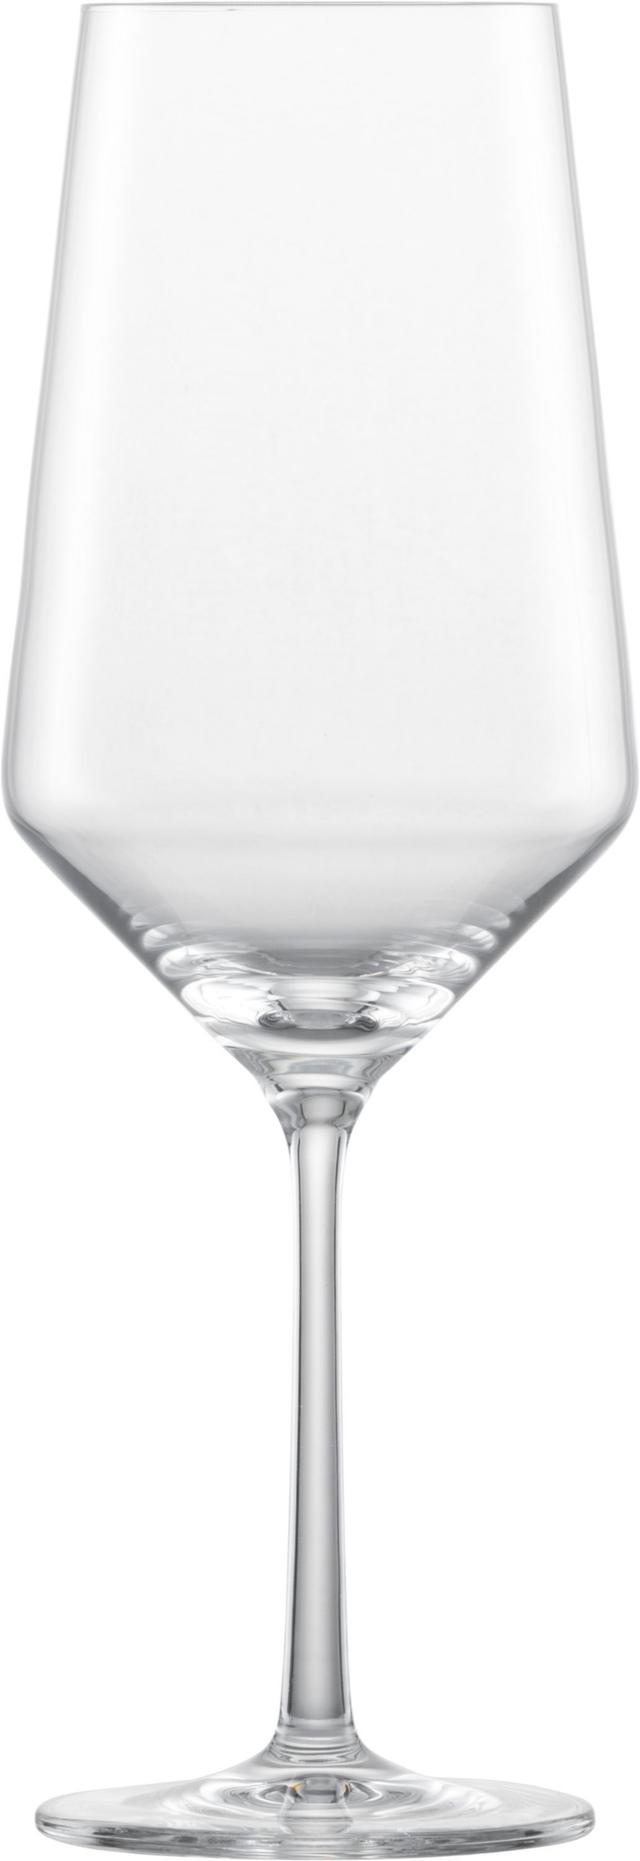 zwiesel glas pure bordeaux goblet 130 - 0.68 ltr - geschenkverpakking 2 glazen